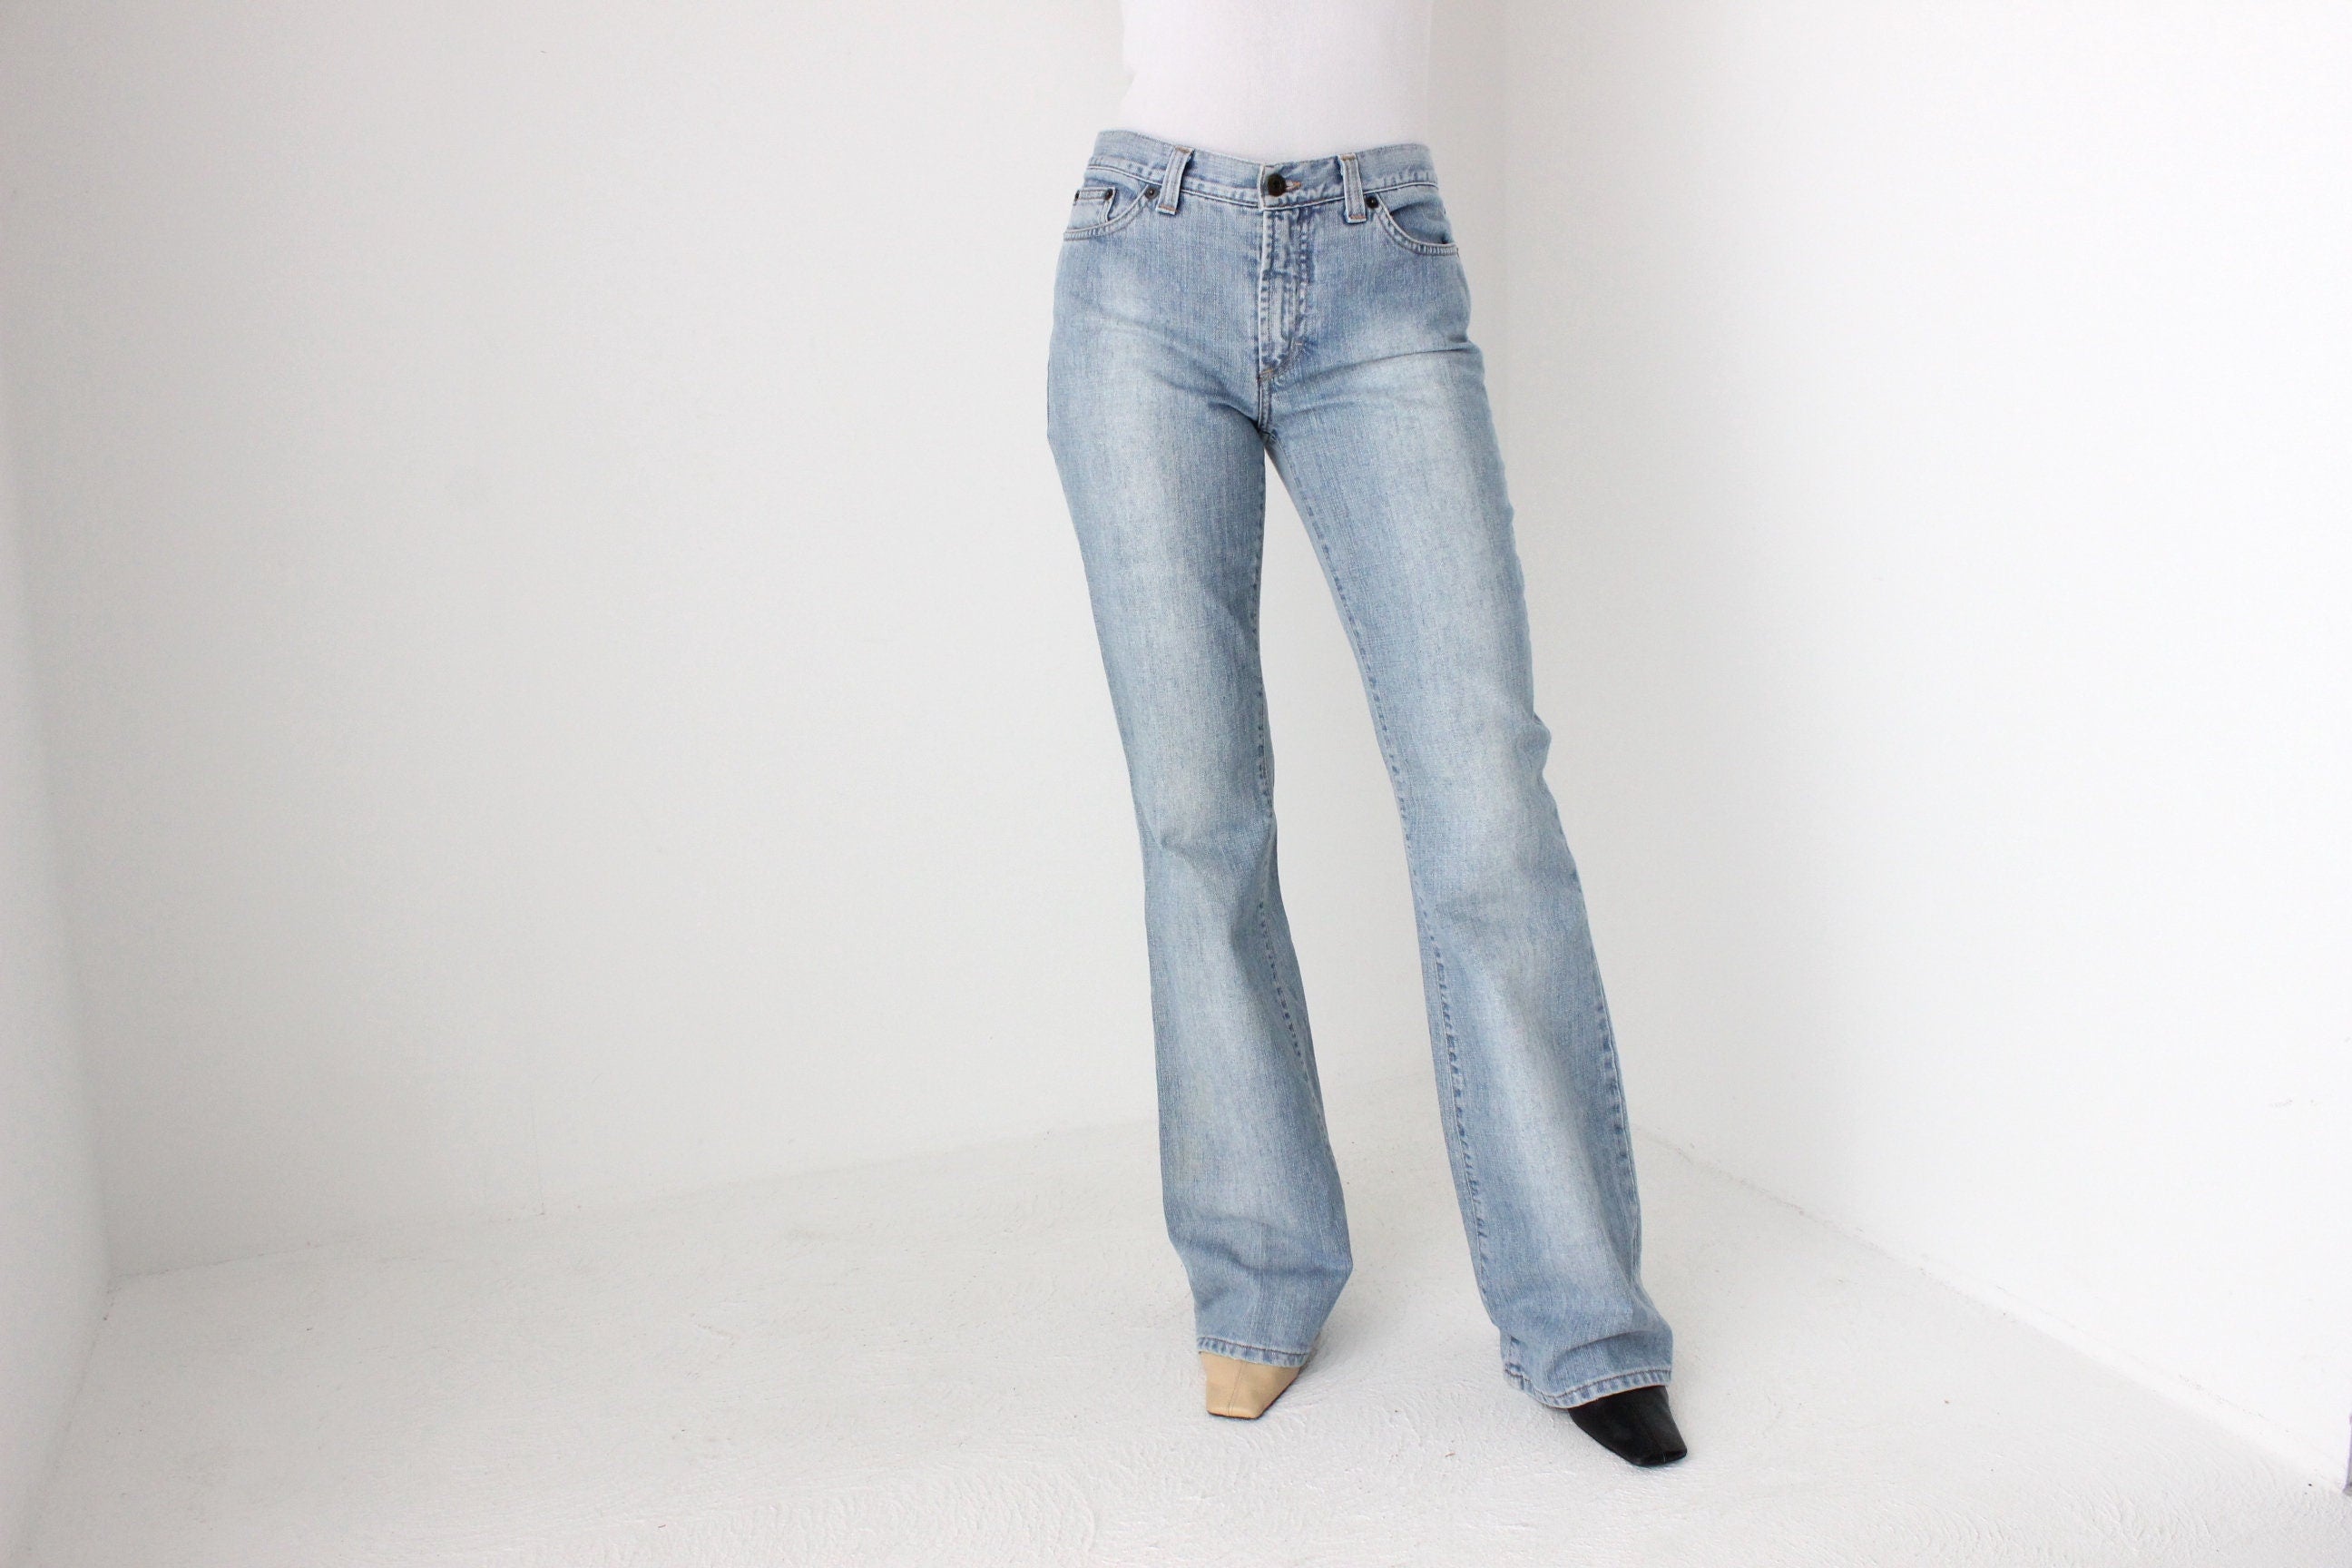 Dolce & Gabbana 2000s Lightwash Flared Jeans w/ Pocket Shadows